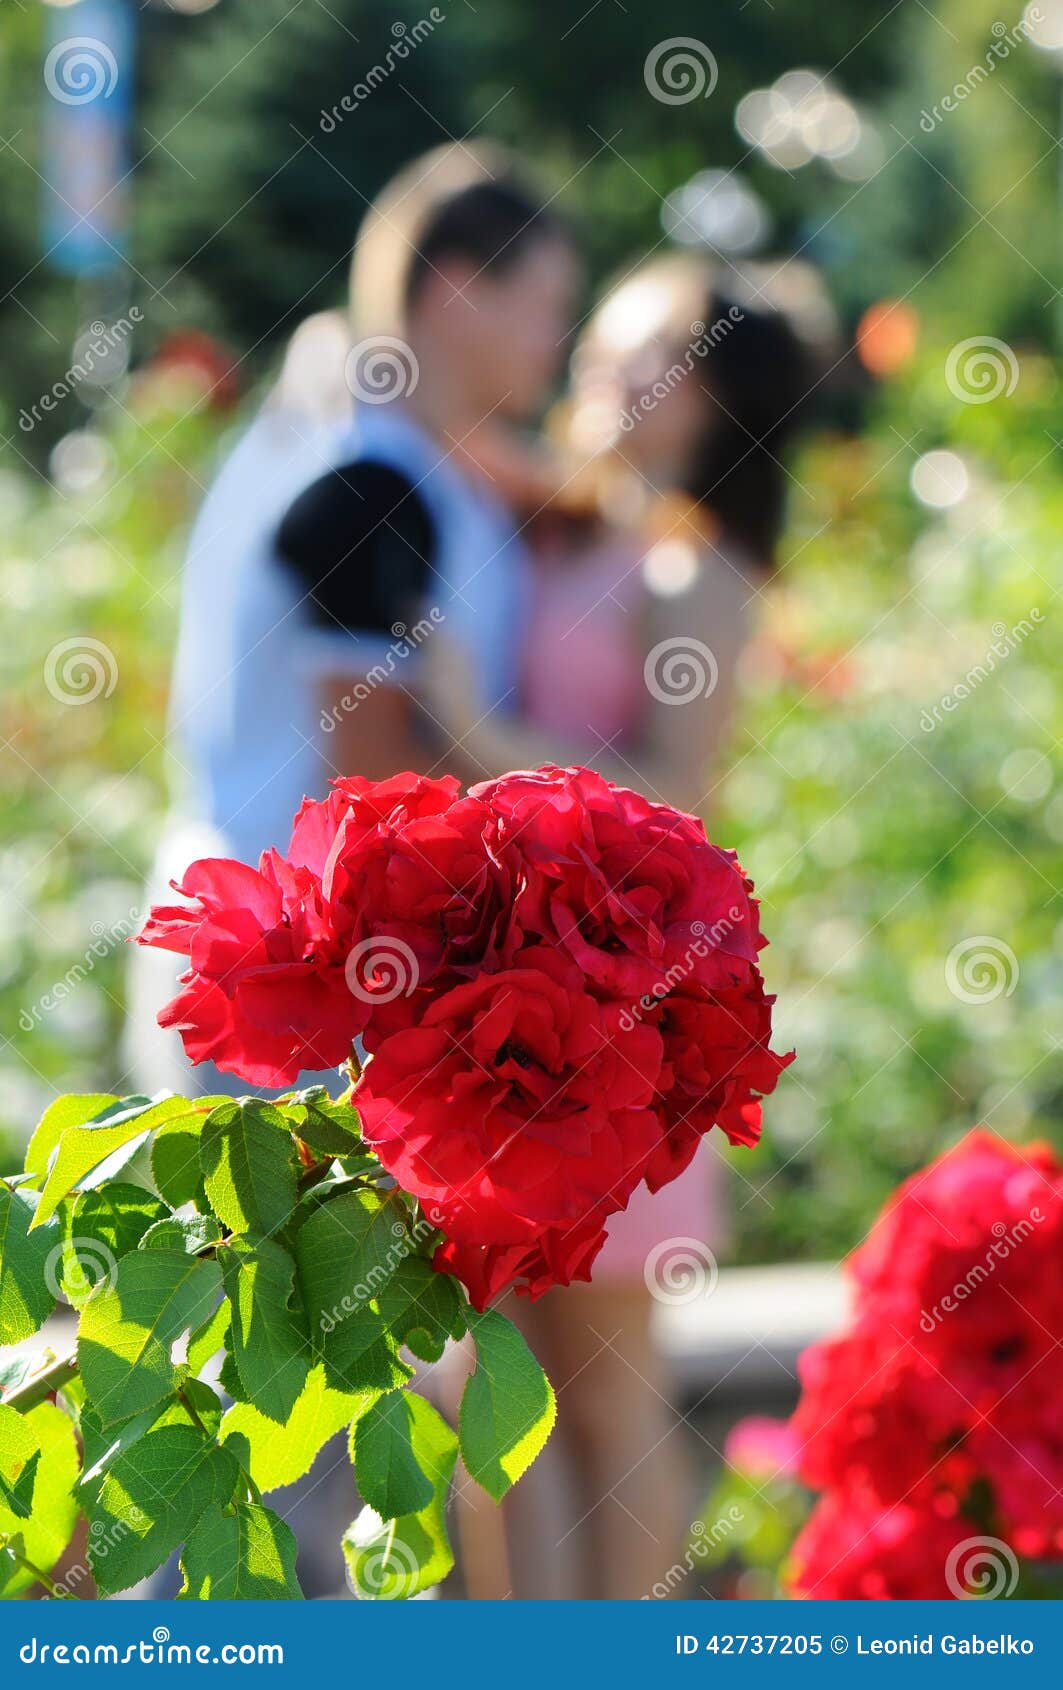 rosebush also kiss couple